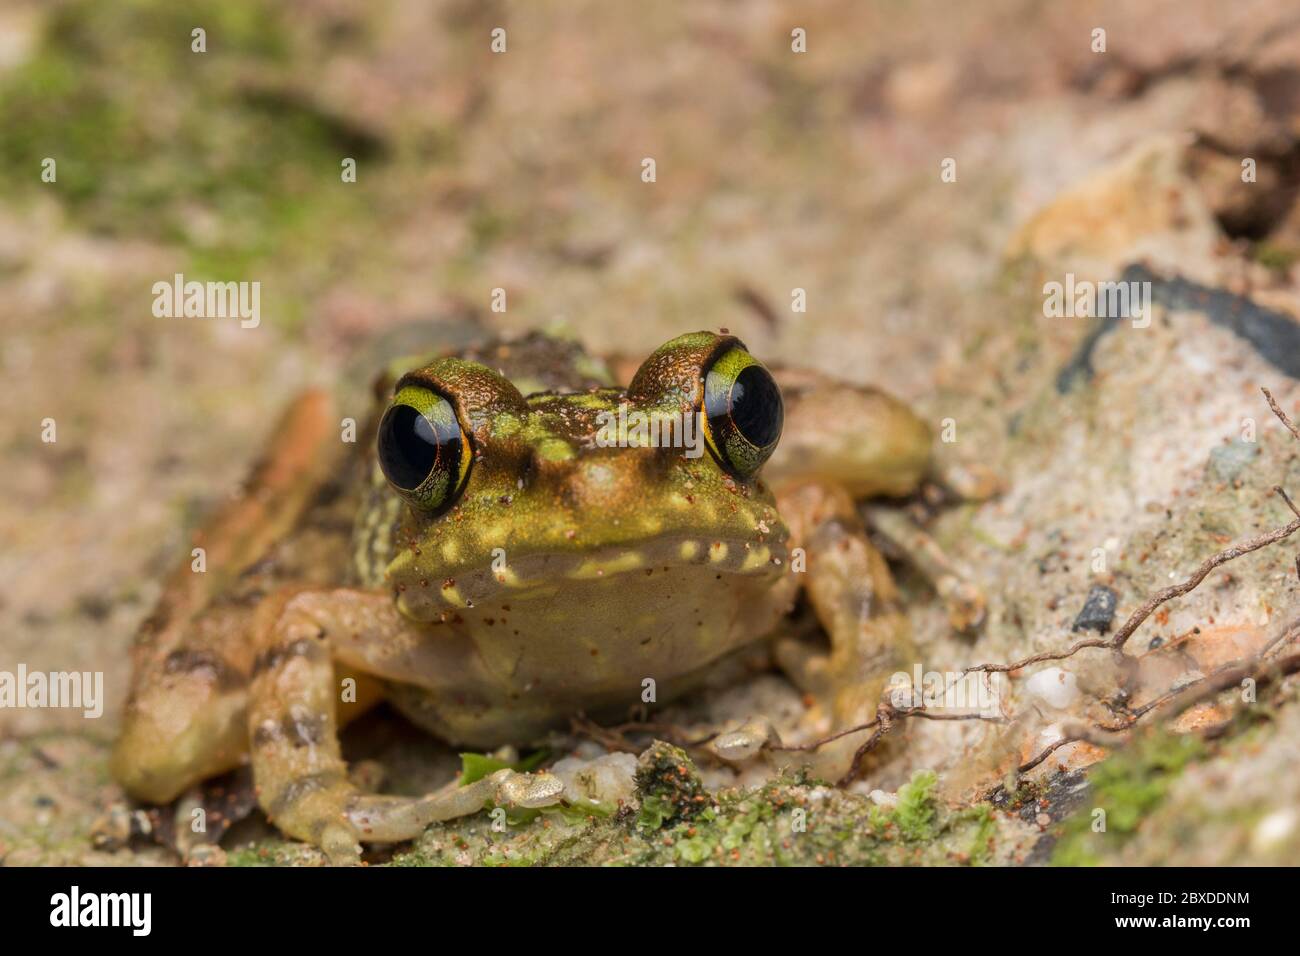 Bella rana di Borneo, Kinabalu Torrent Frog , Macro immagine di rana al Broneo. Foto Stock